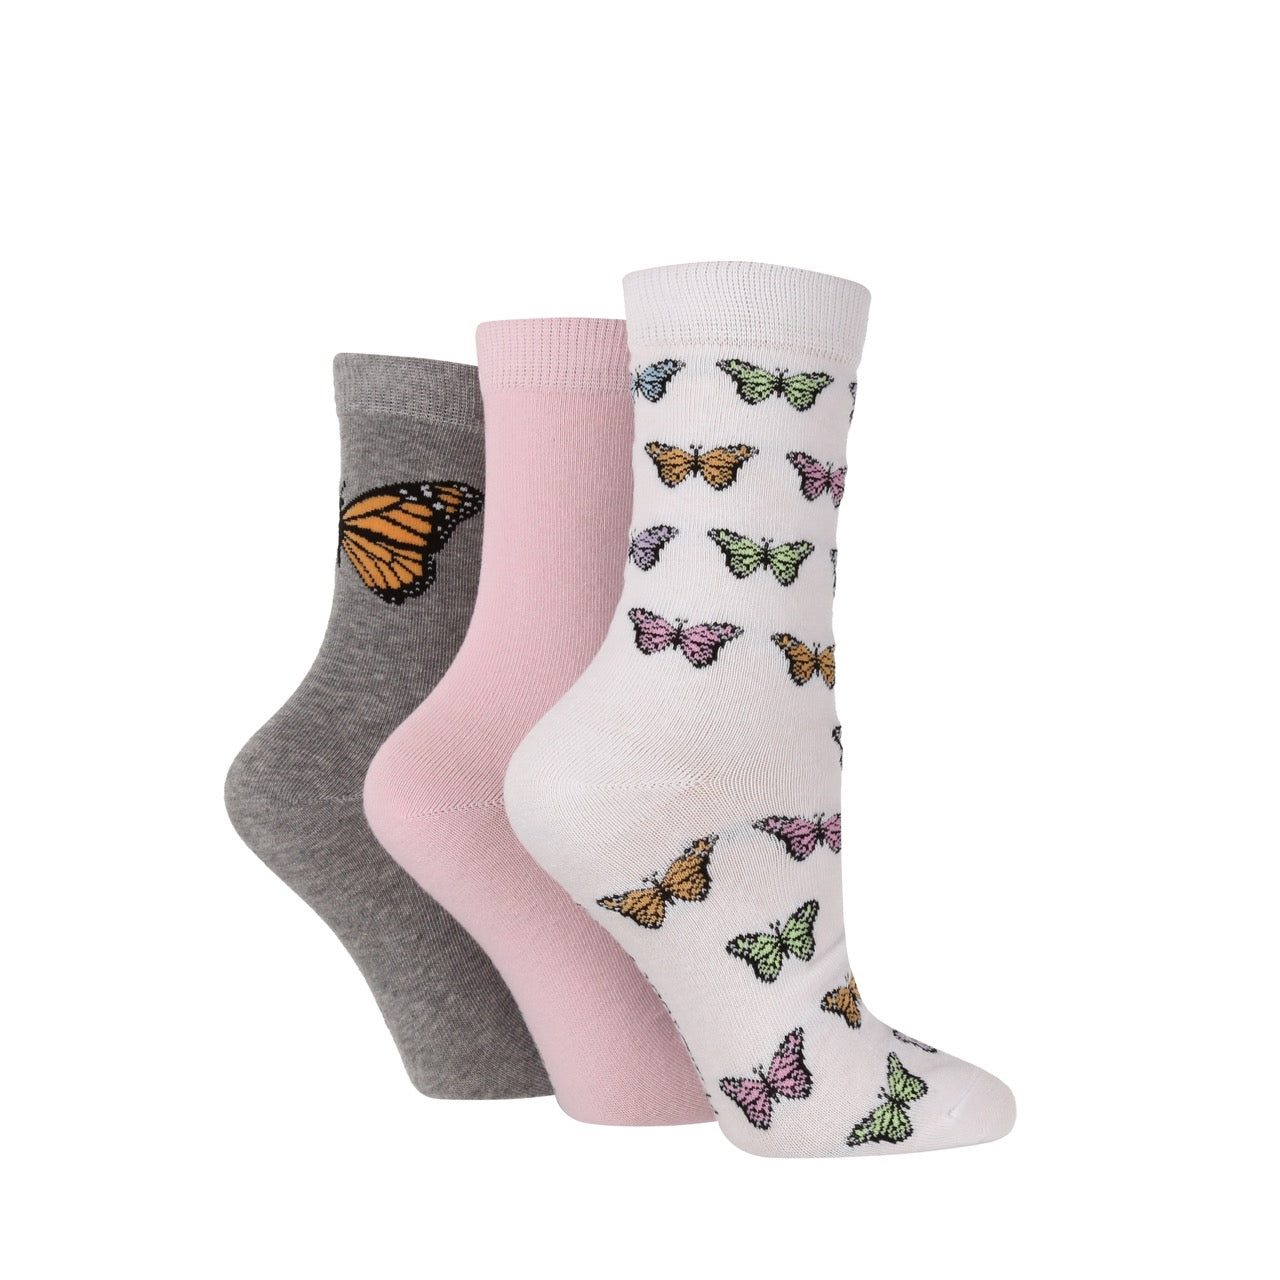 WILDFEET Ladies 3PK Colourful Novelty Cotton Crew Socks